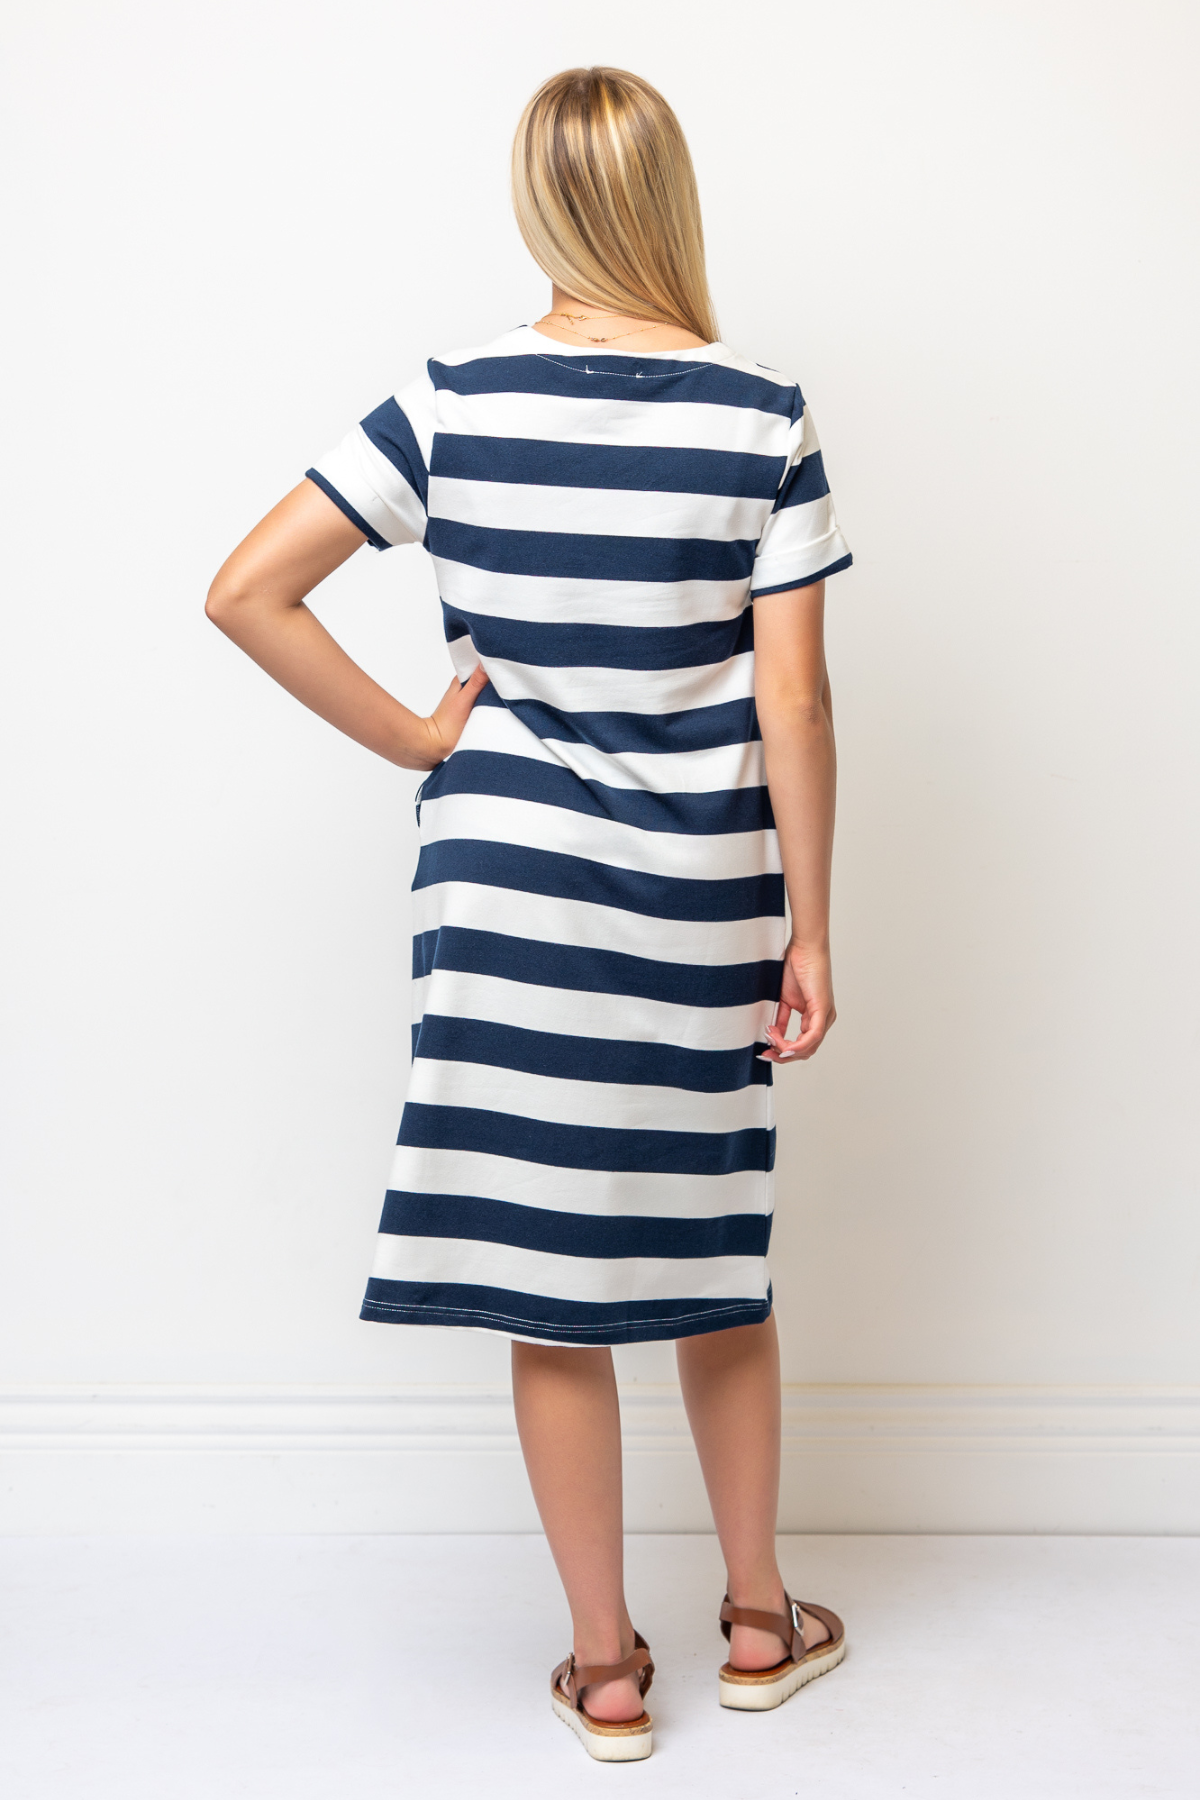 Celine Stripe Dress in Blue/White